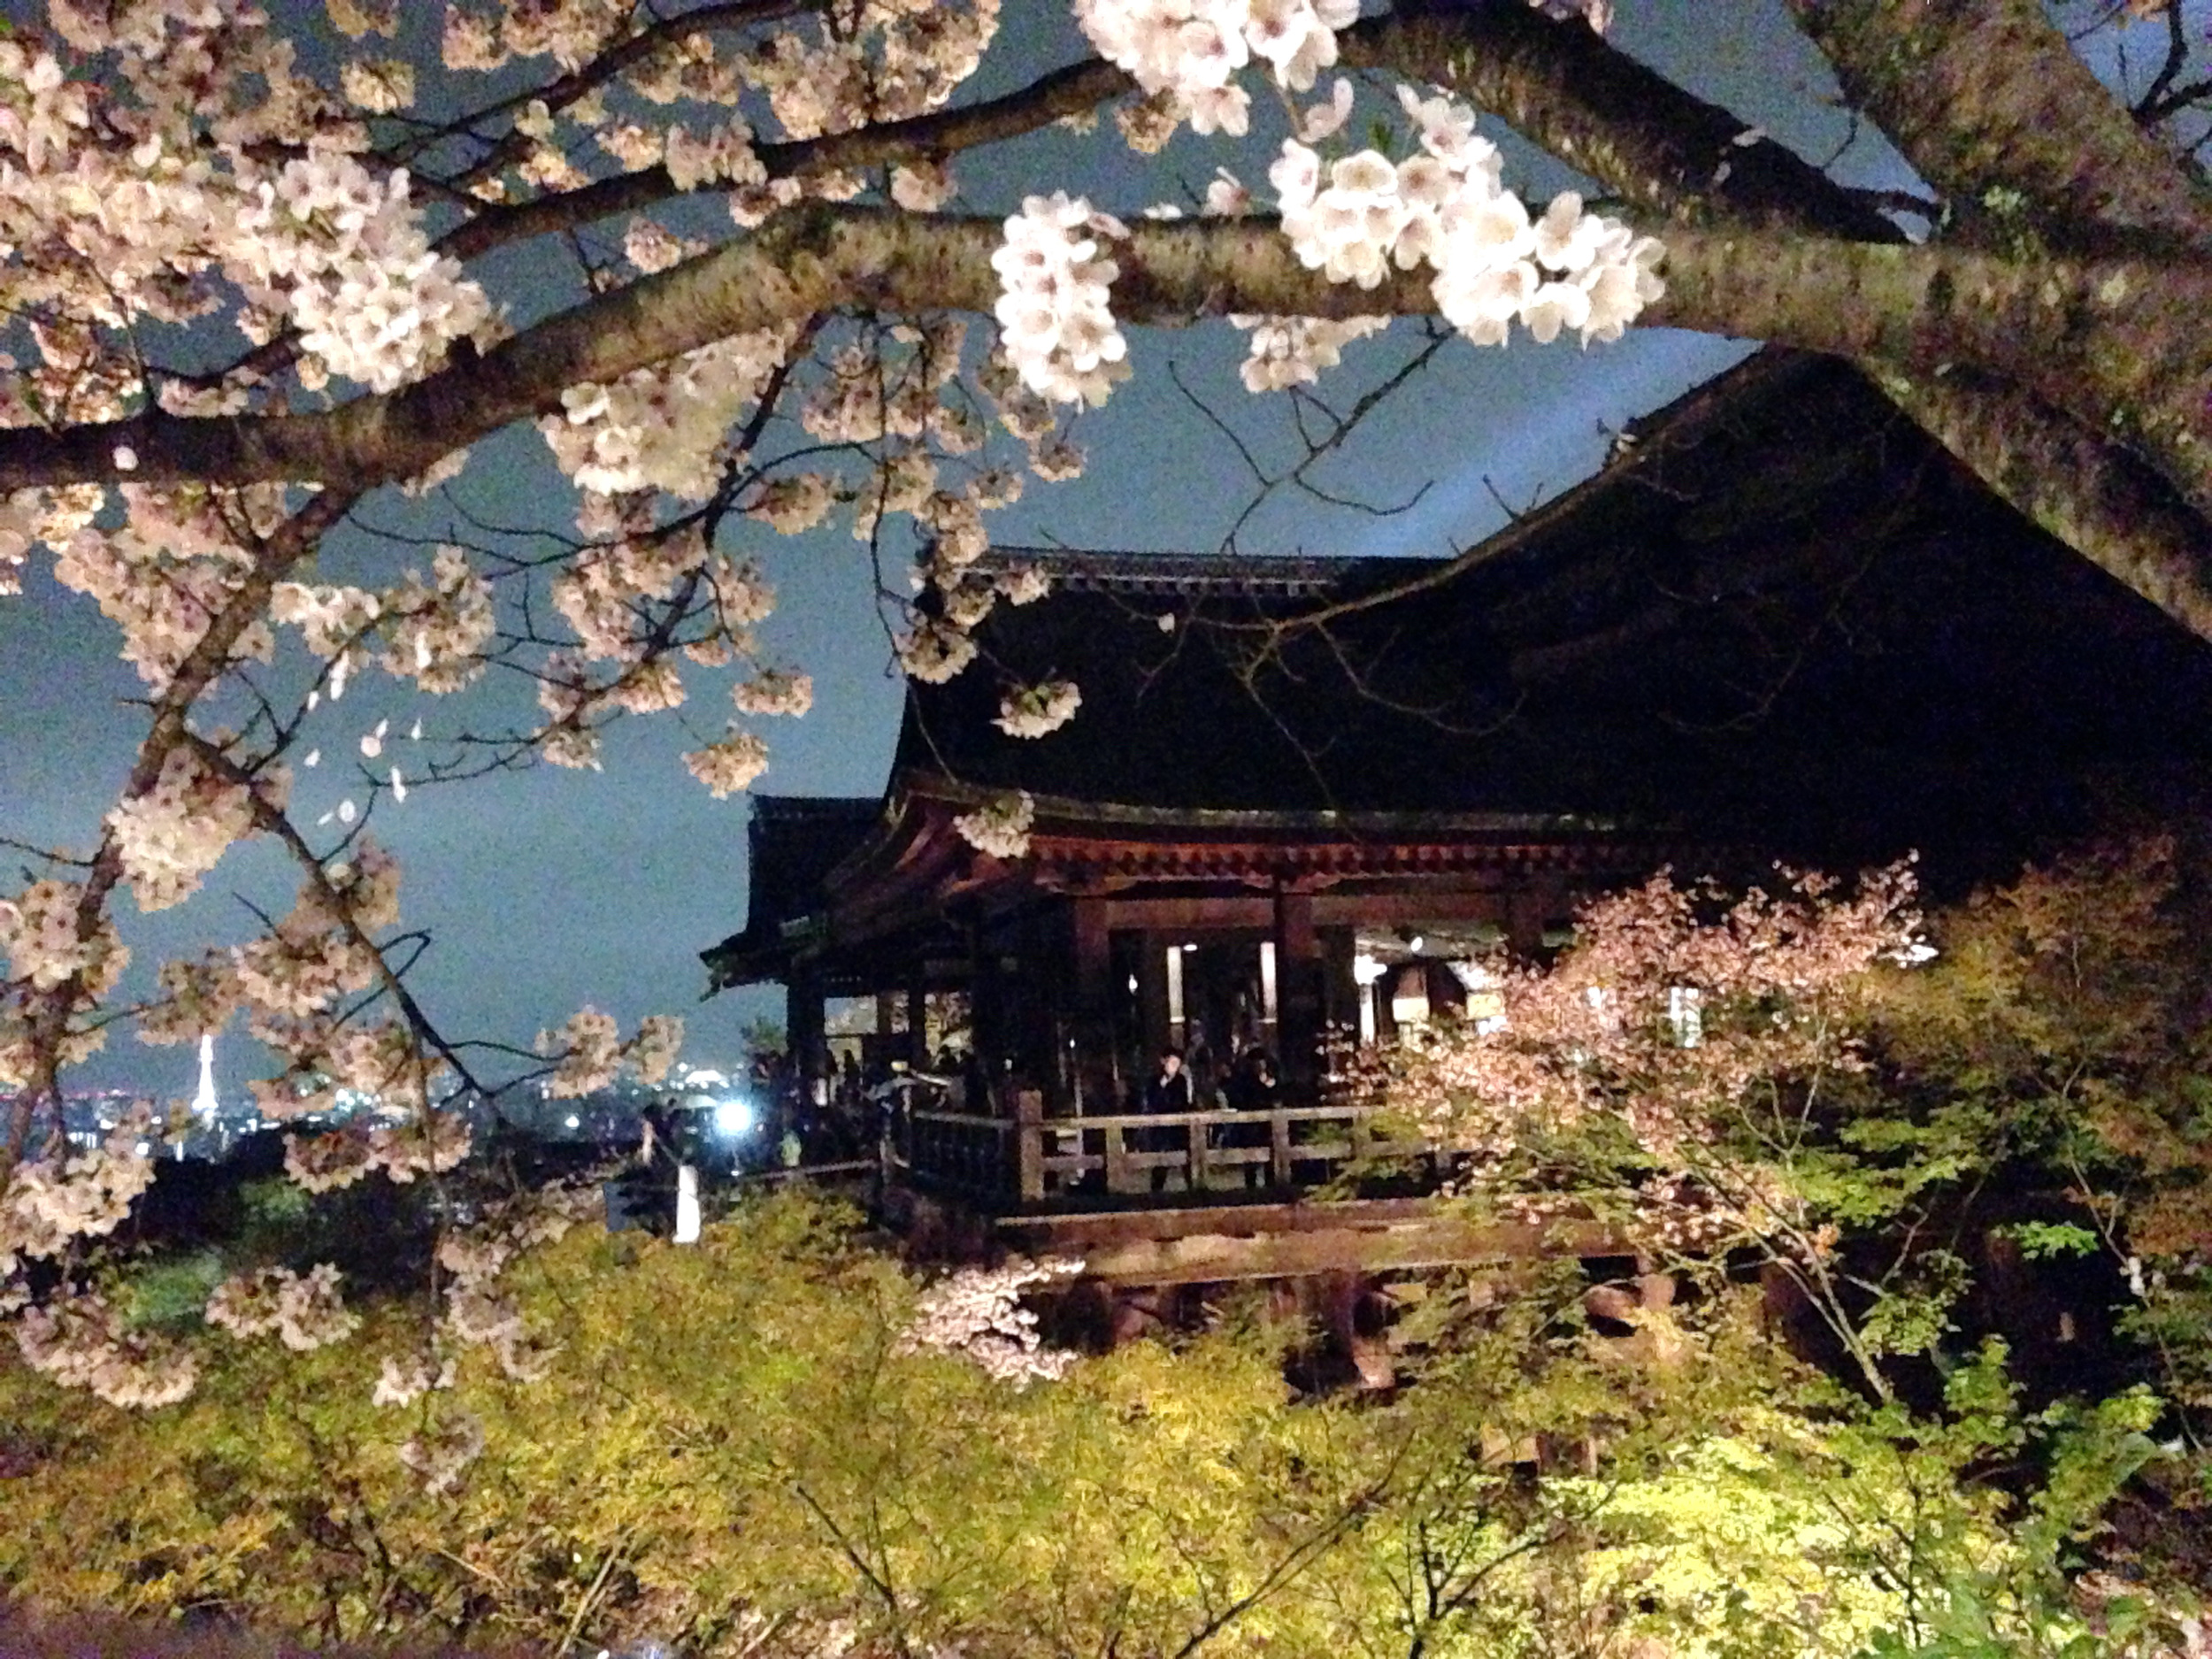 Kiyomizu-dera at night